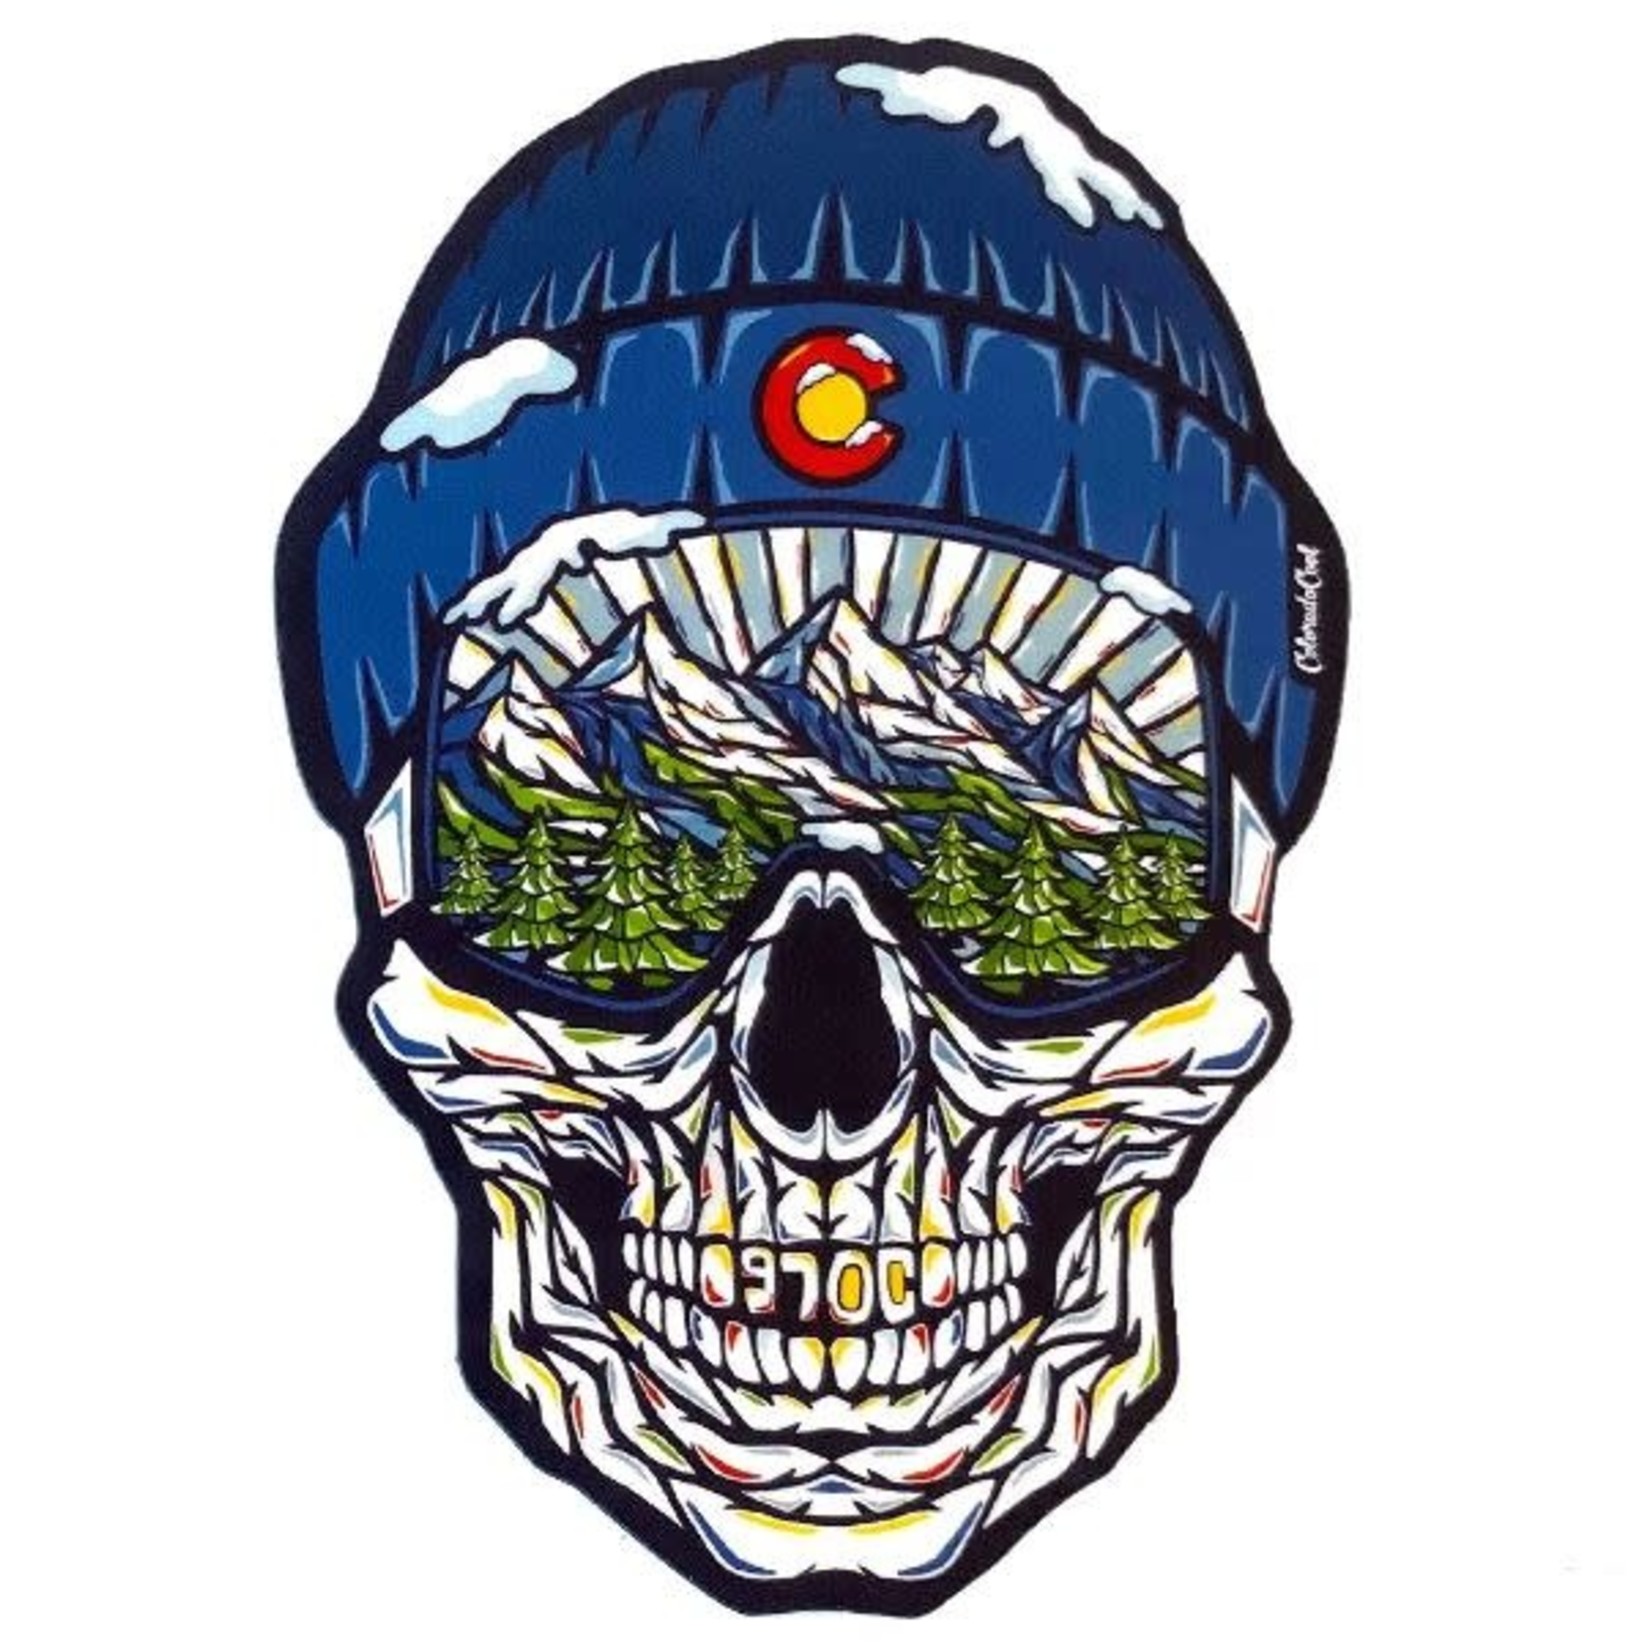 Colorado Cool CC Skull Sticker Navy